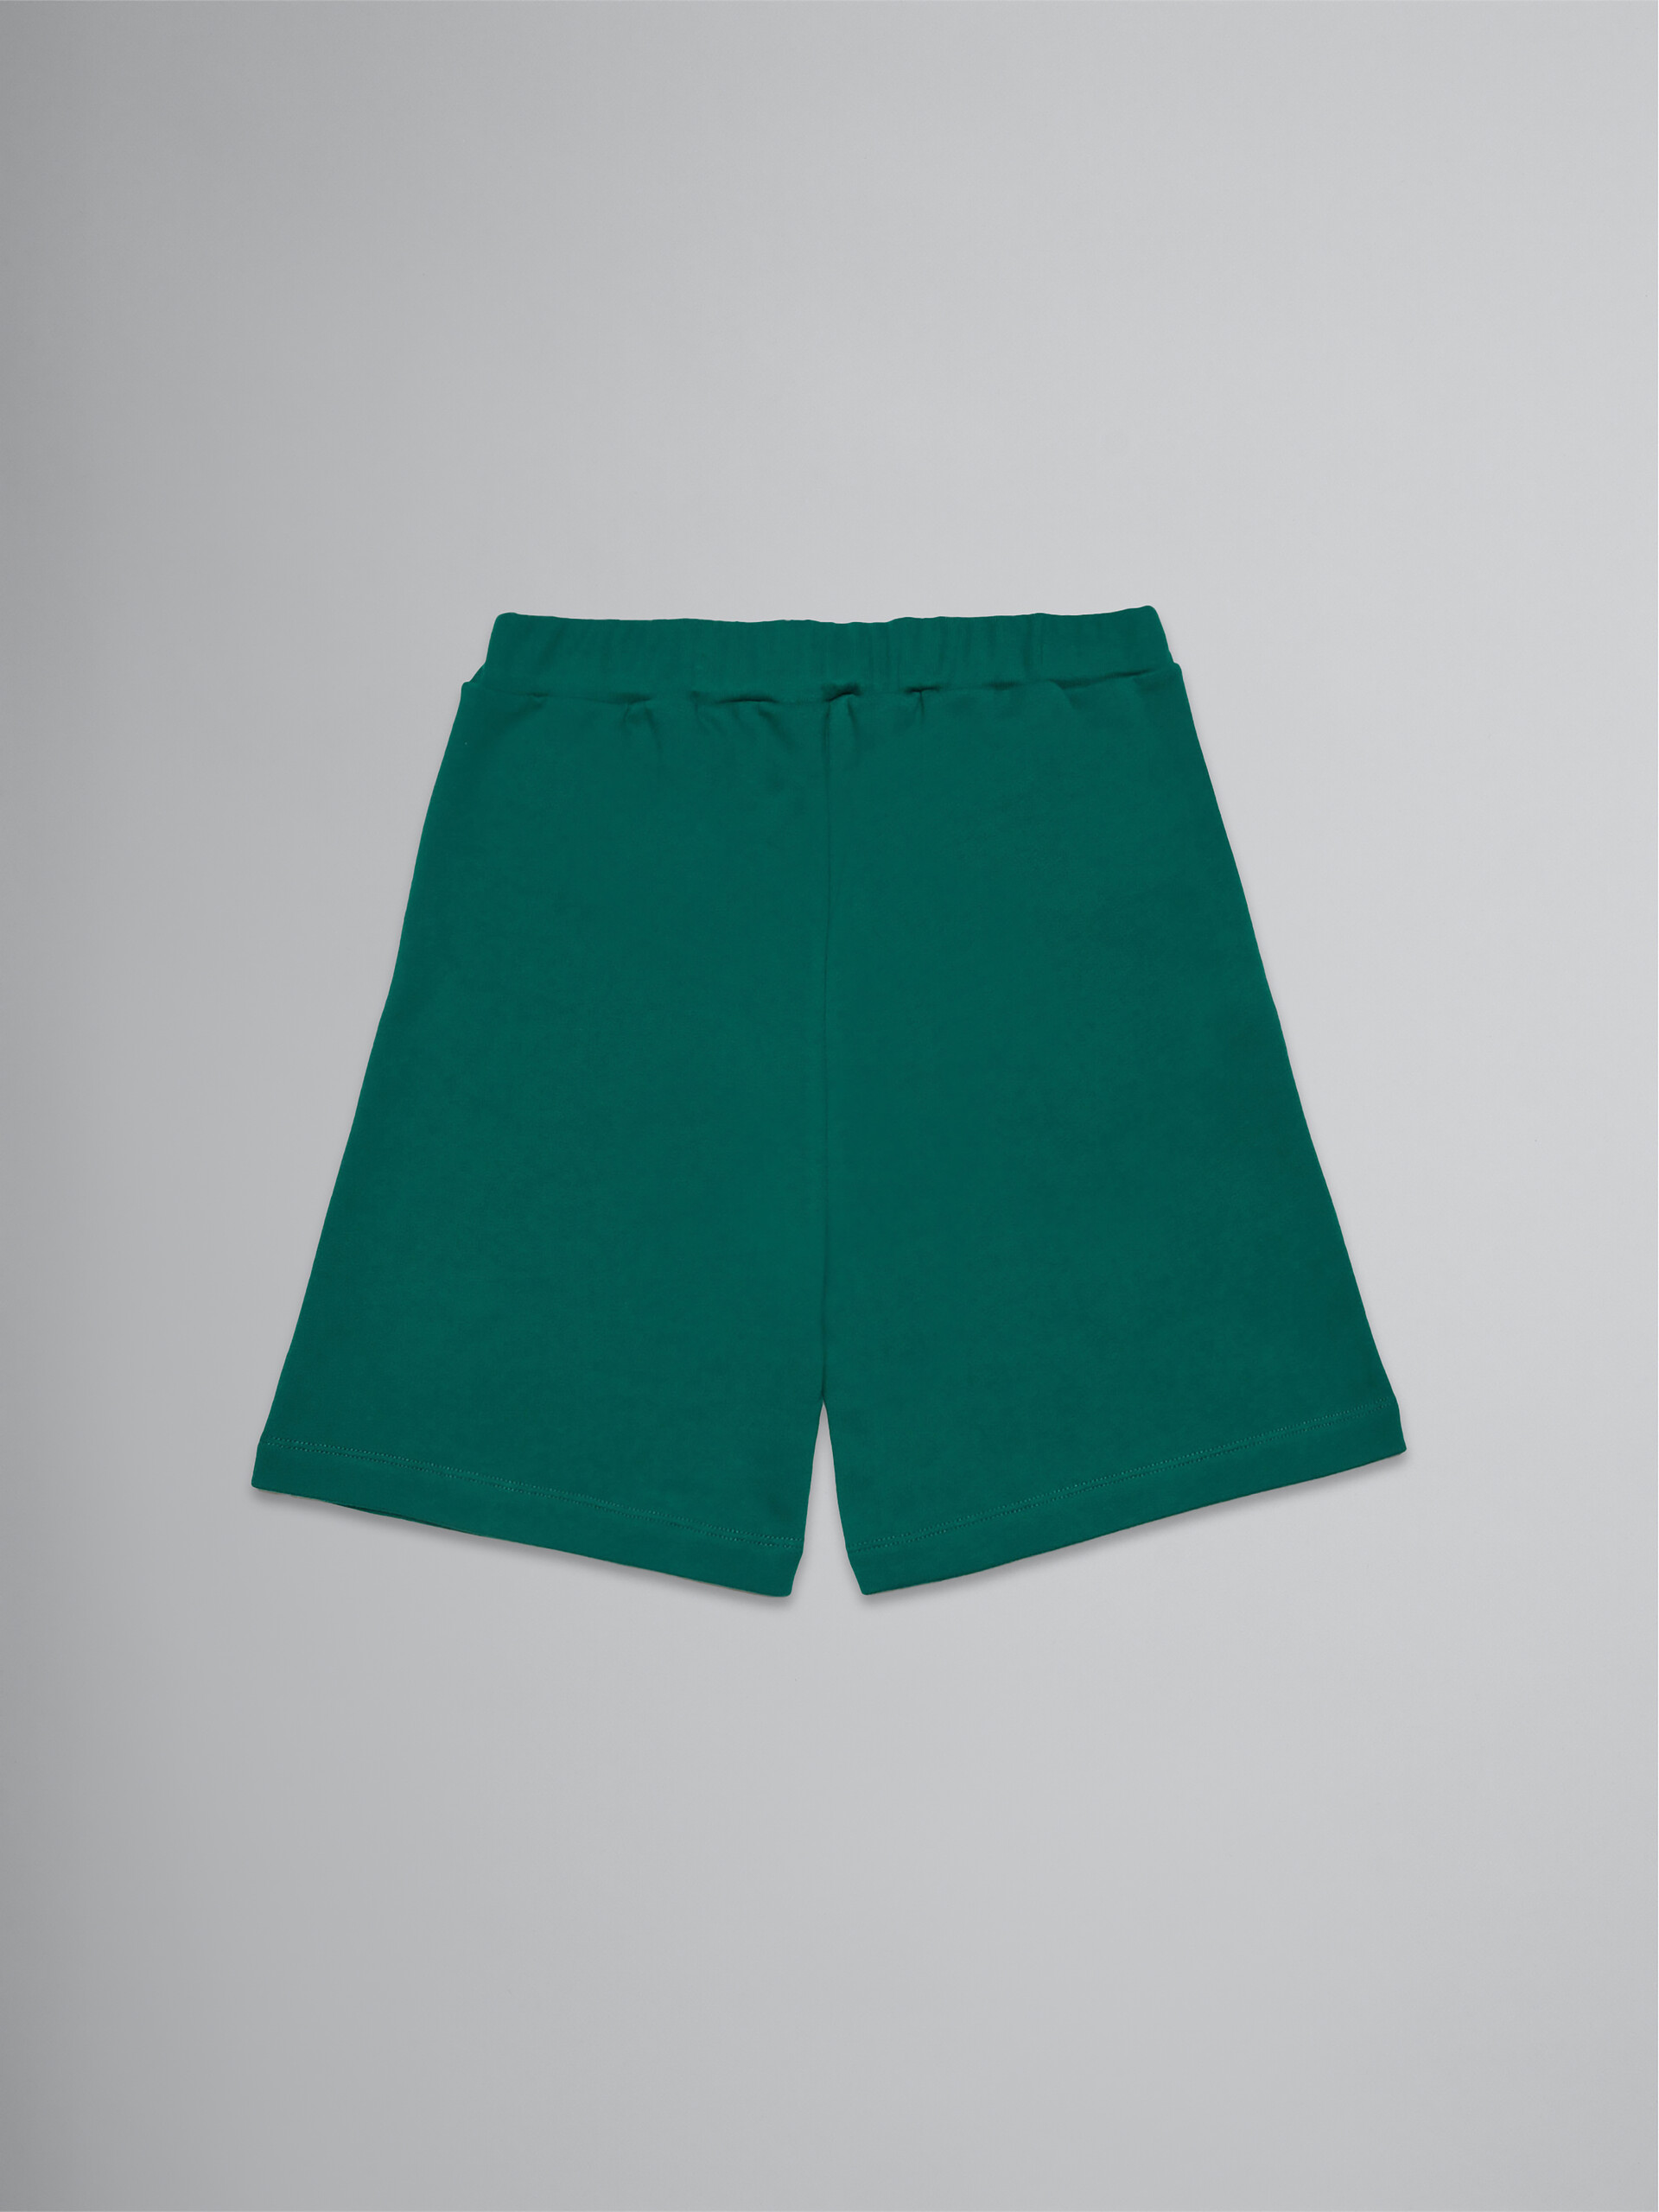 Green fleece shorts with logo - Pants - Image 2